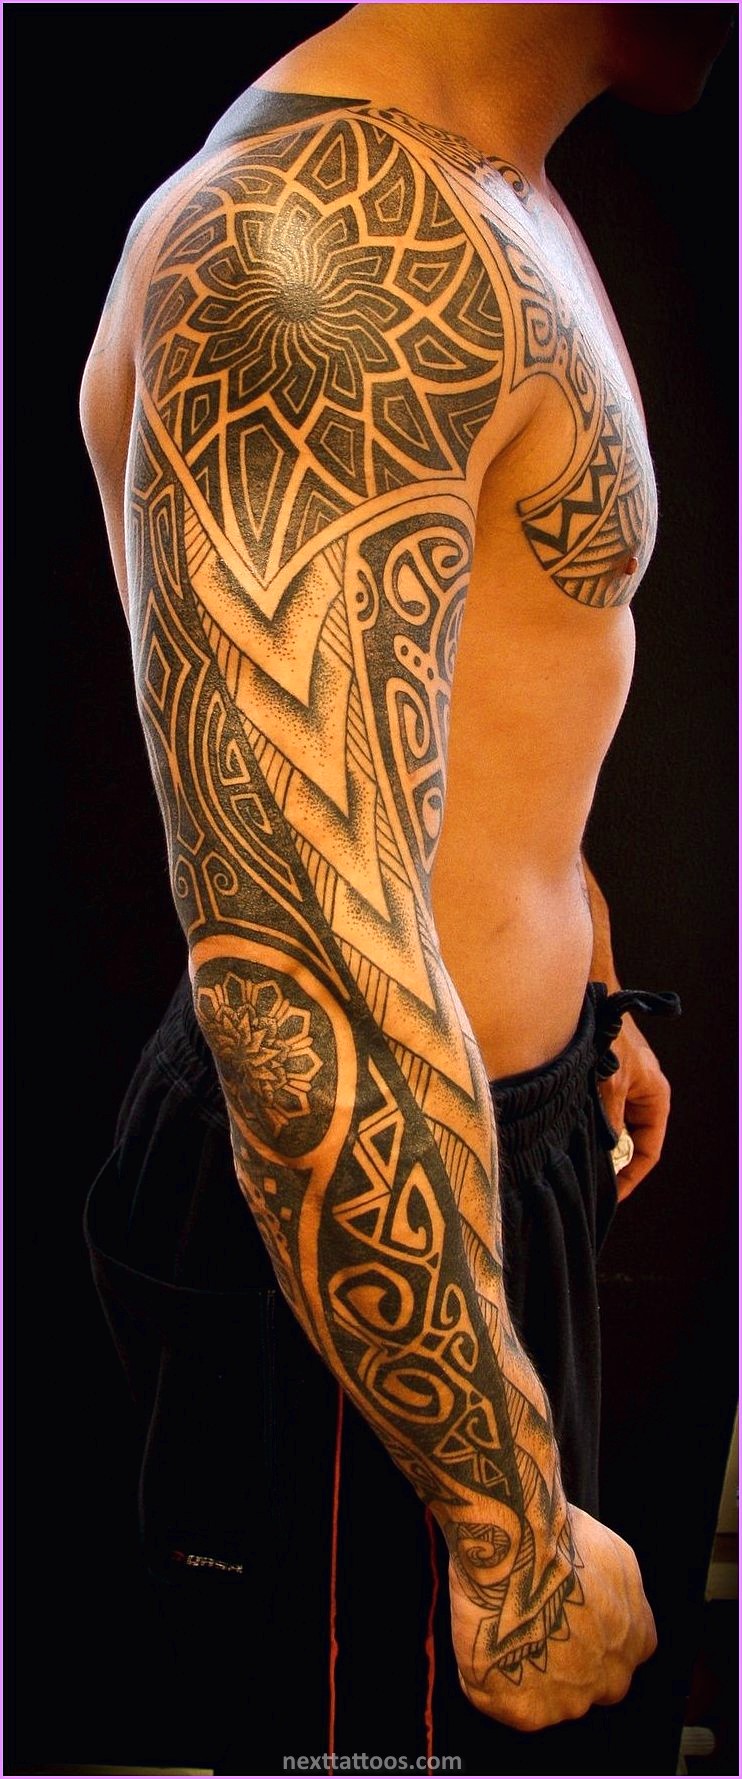 Tattoo Ideas For Men Arm